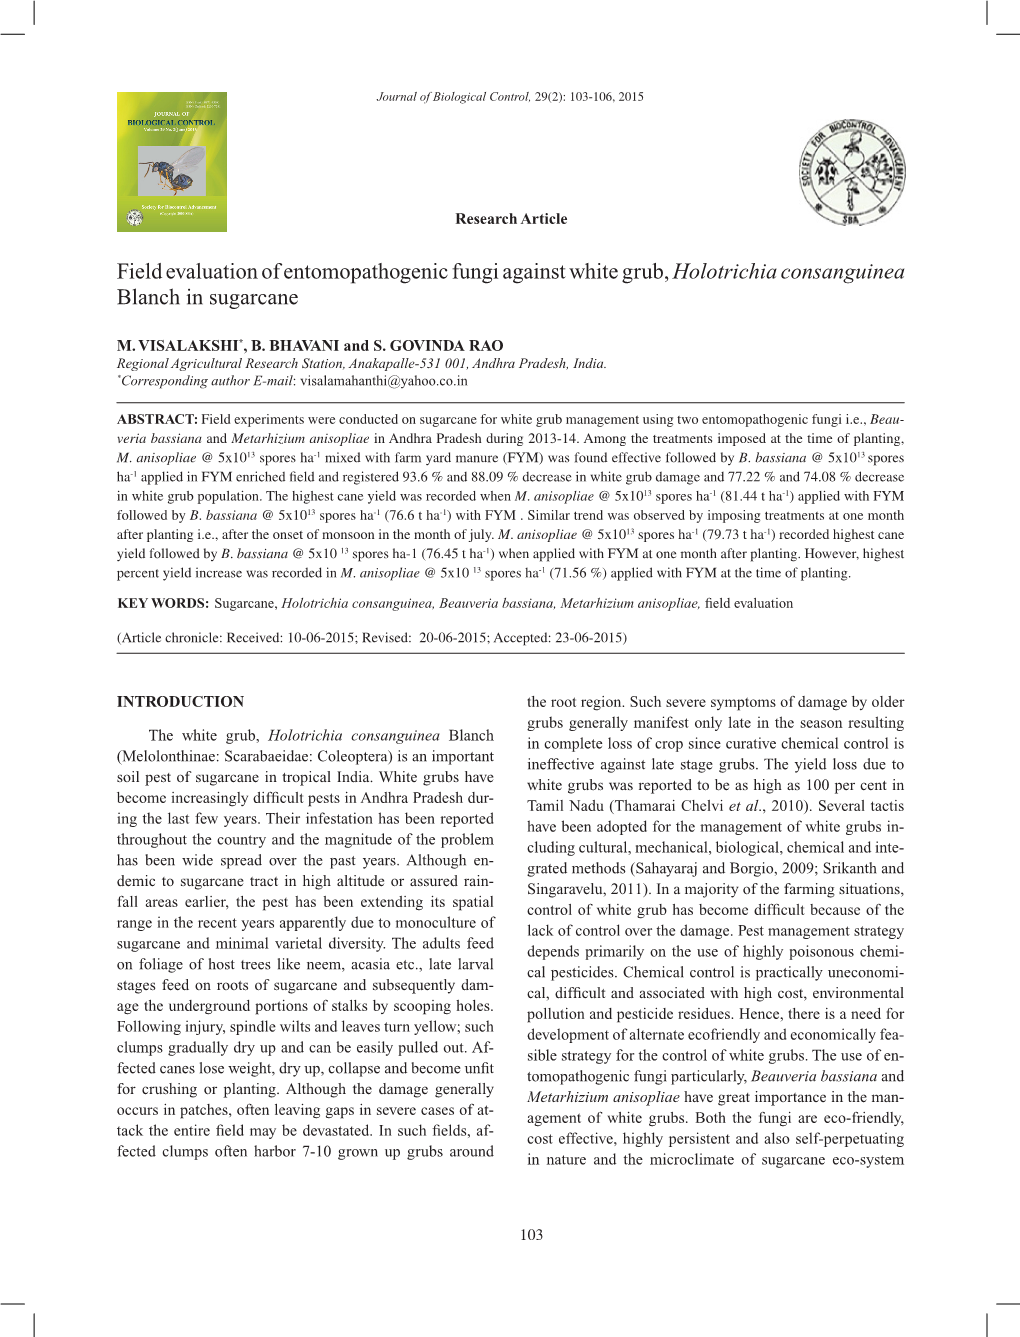 Field Evaluation of Entomopathogenic Fungi Against White Grub, Holotrichia Consanguinea Blanch in Sugarcane